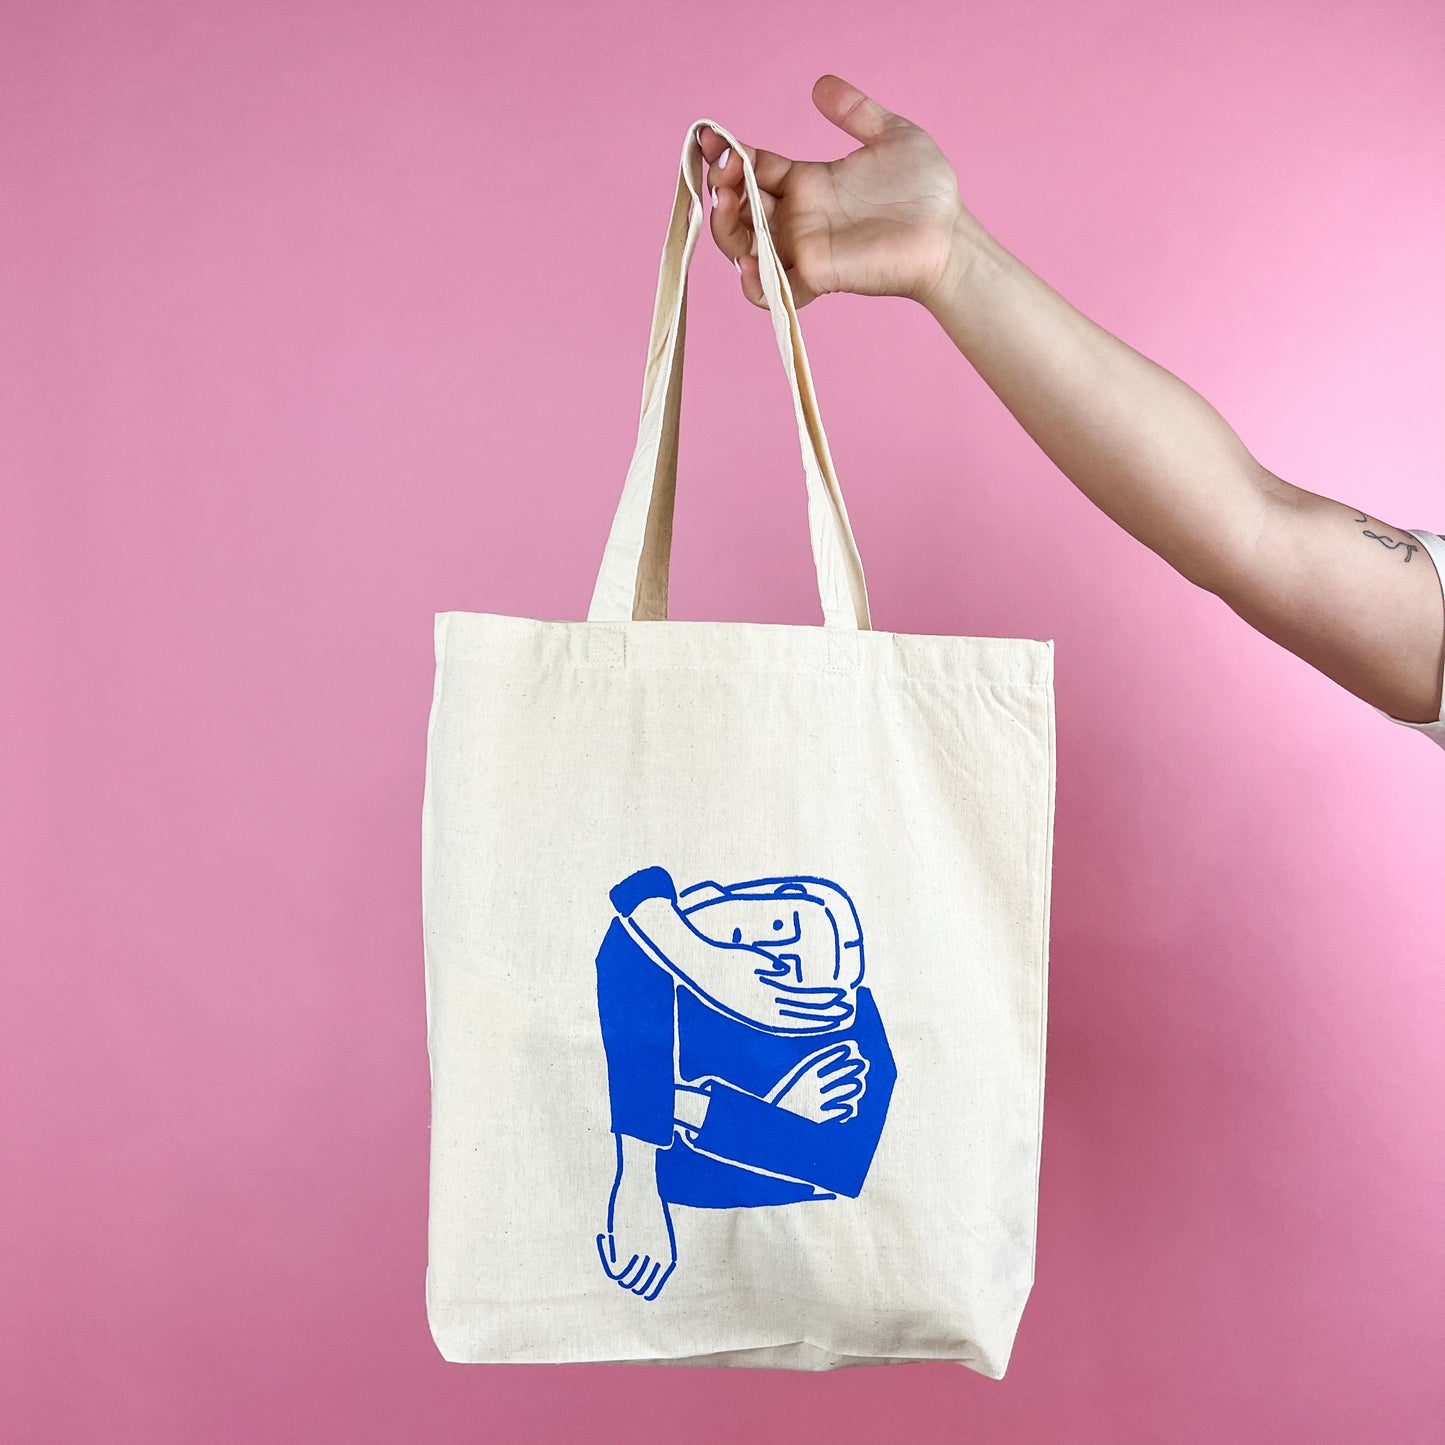 Blue Lady Tote Bag